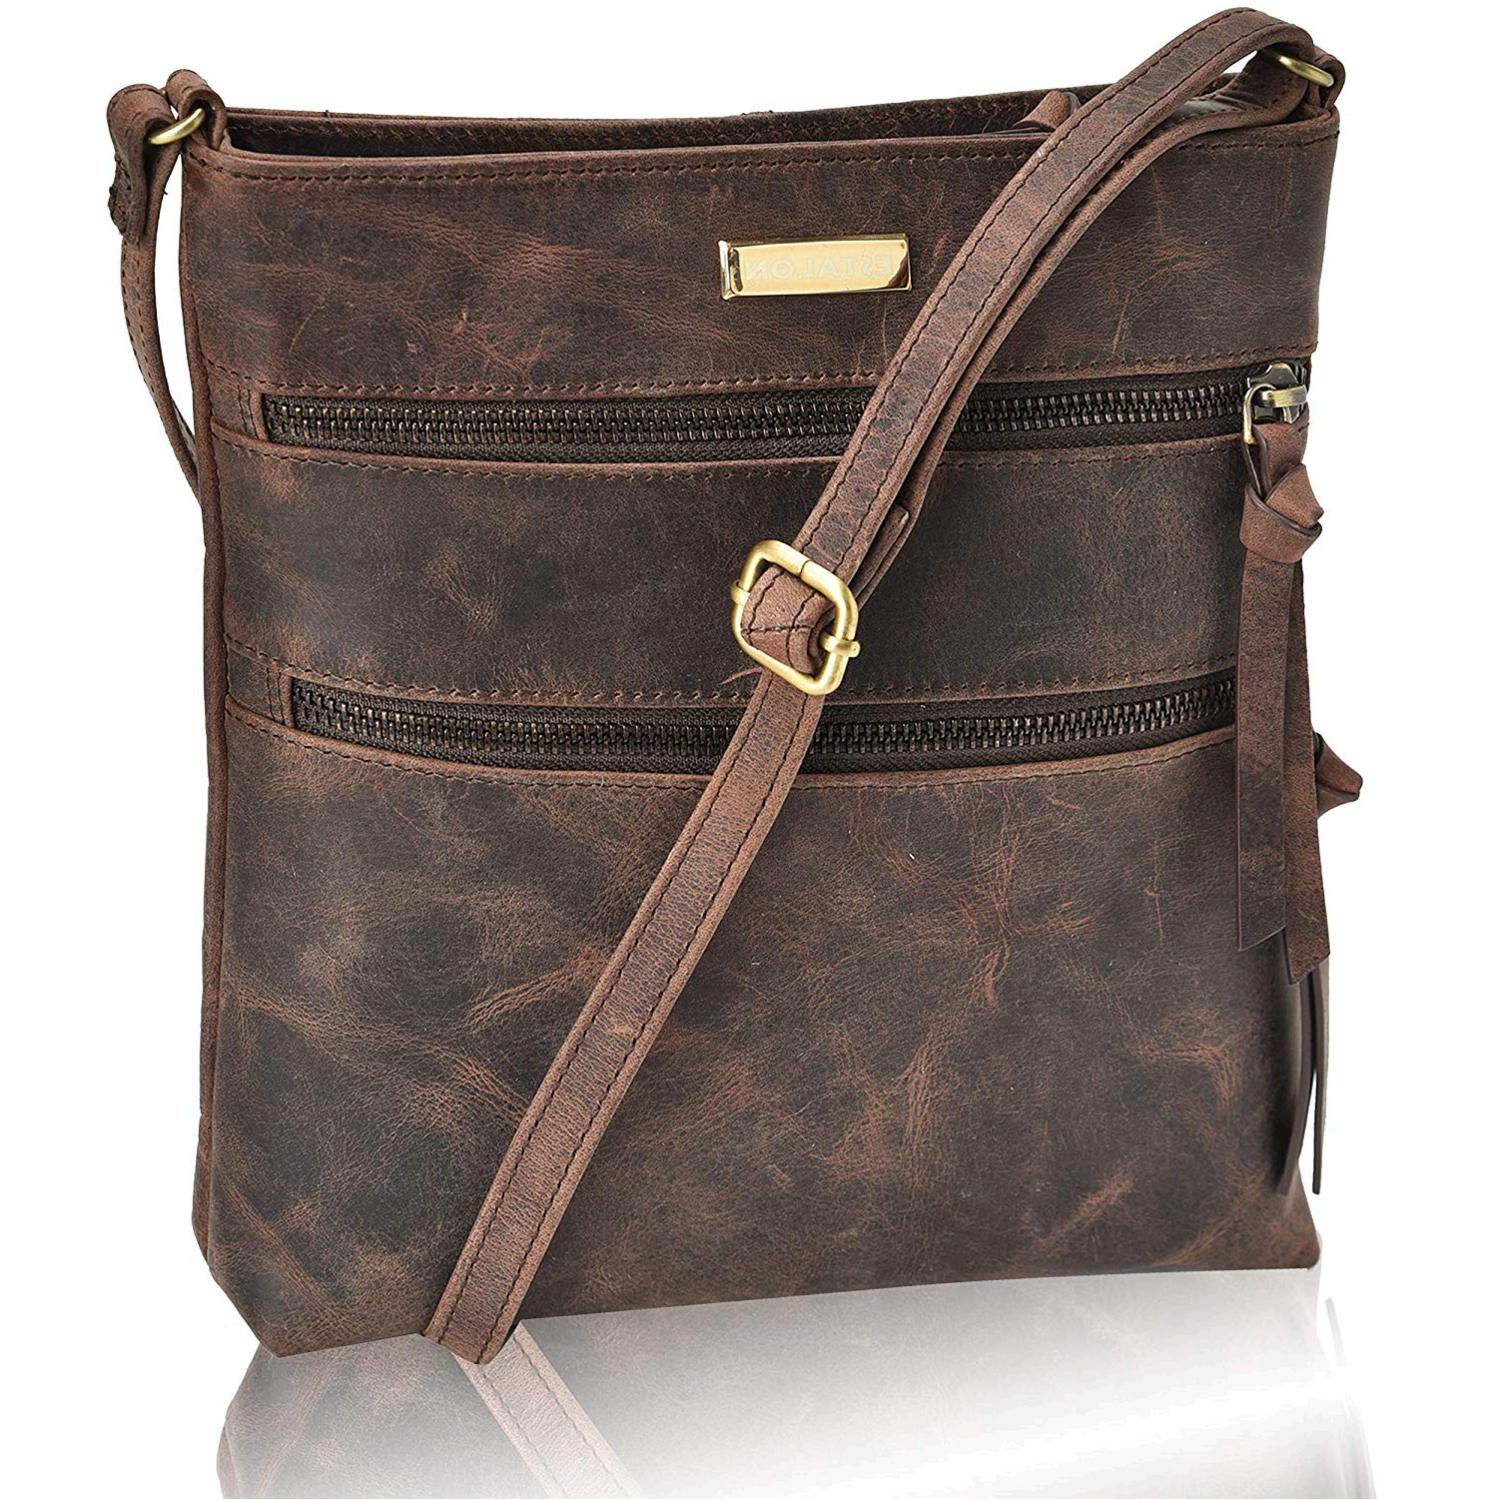 Crossbody Bags for Women - Real Leather Adjustable Shoulder, Brown, Size Medium | eBay